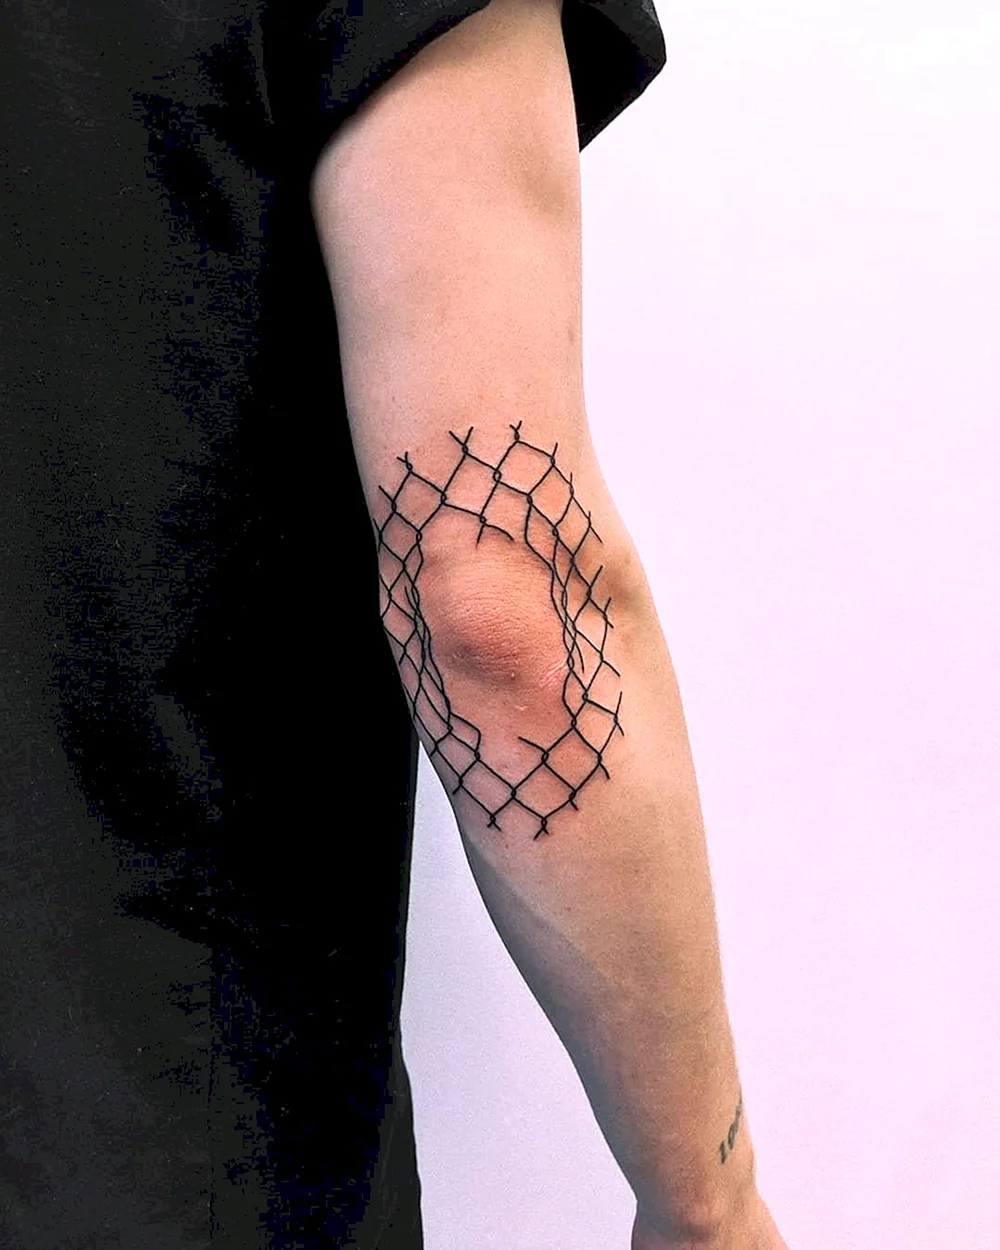 Tattoo of Fence